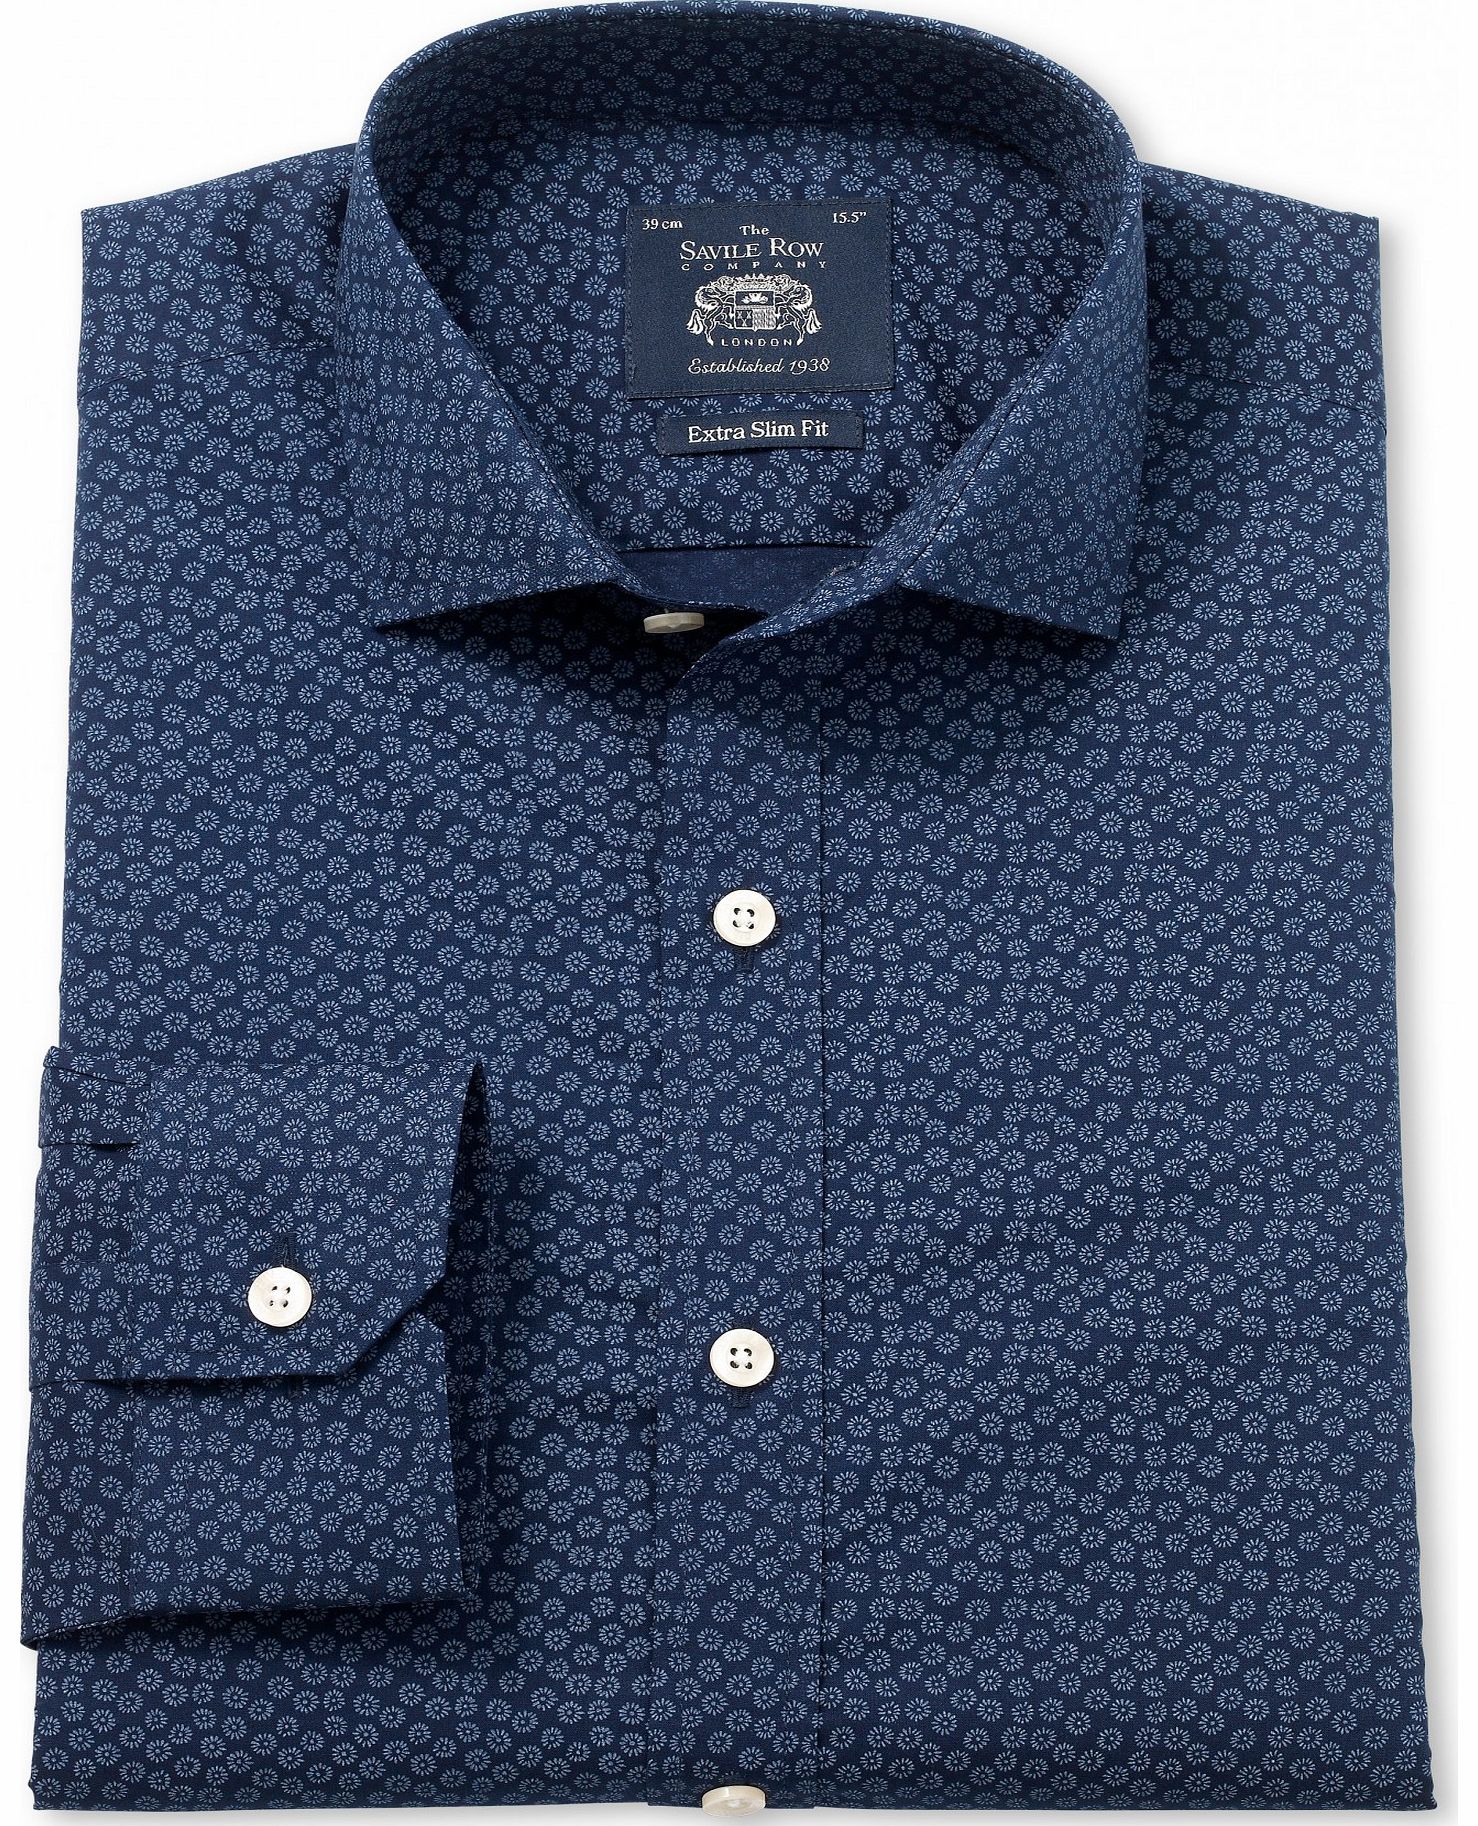 Savile Row Company Navy Blue Printed Extra Slim Fit Shirt 16``